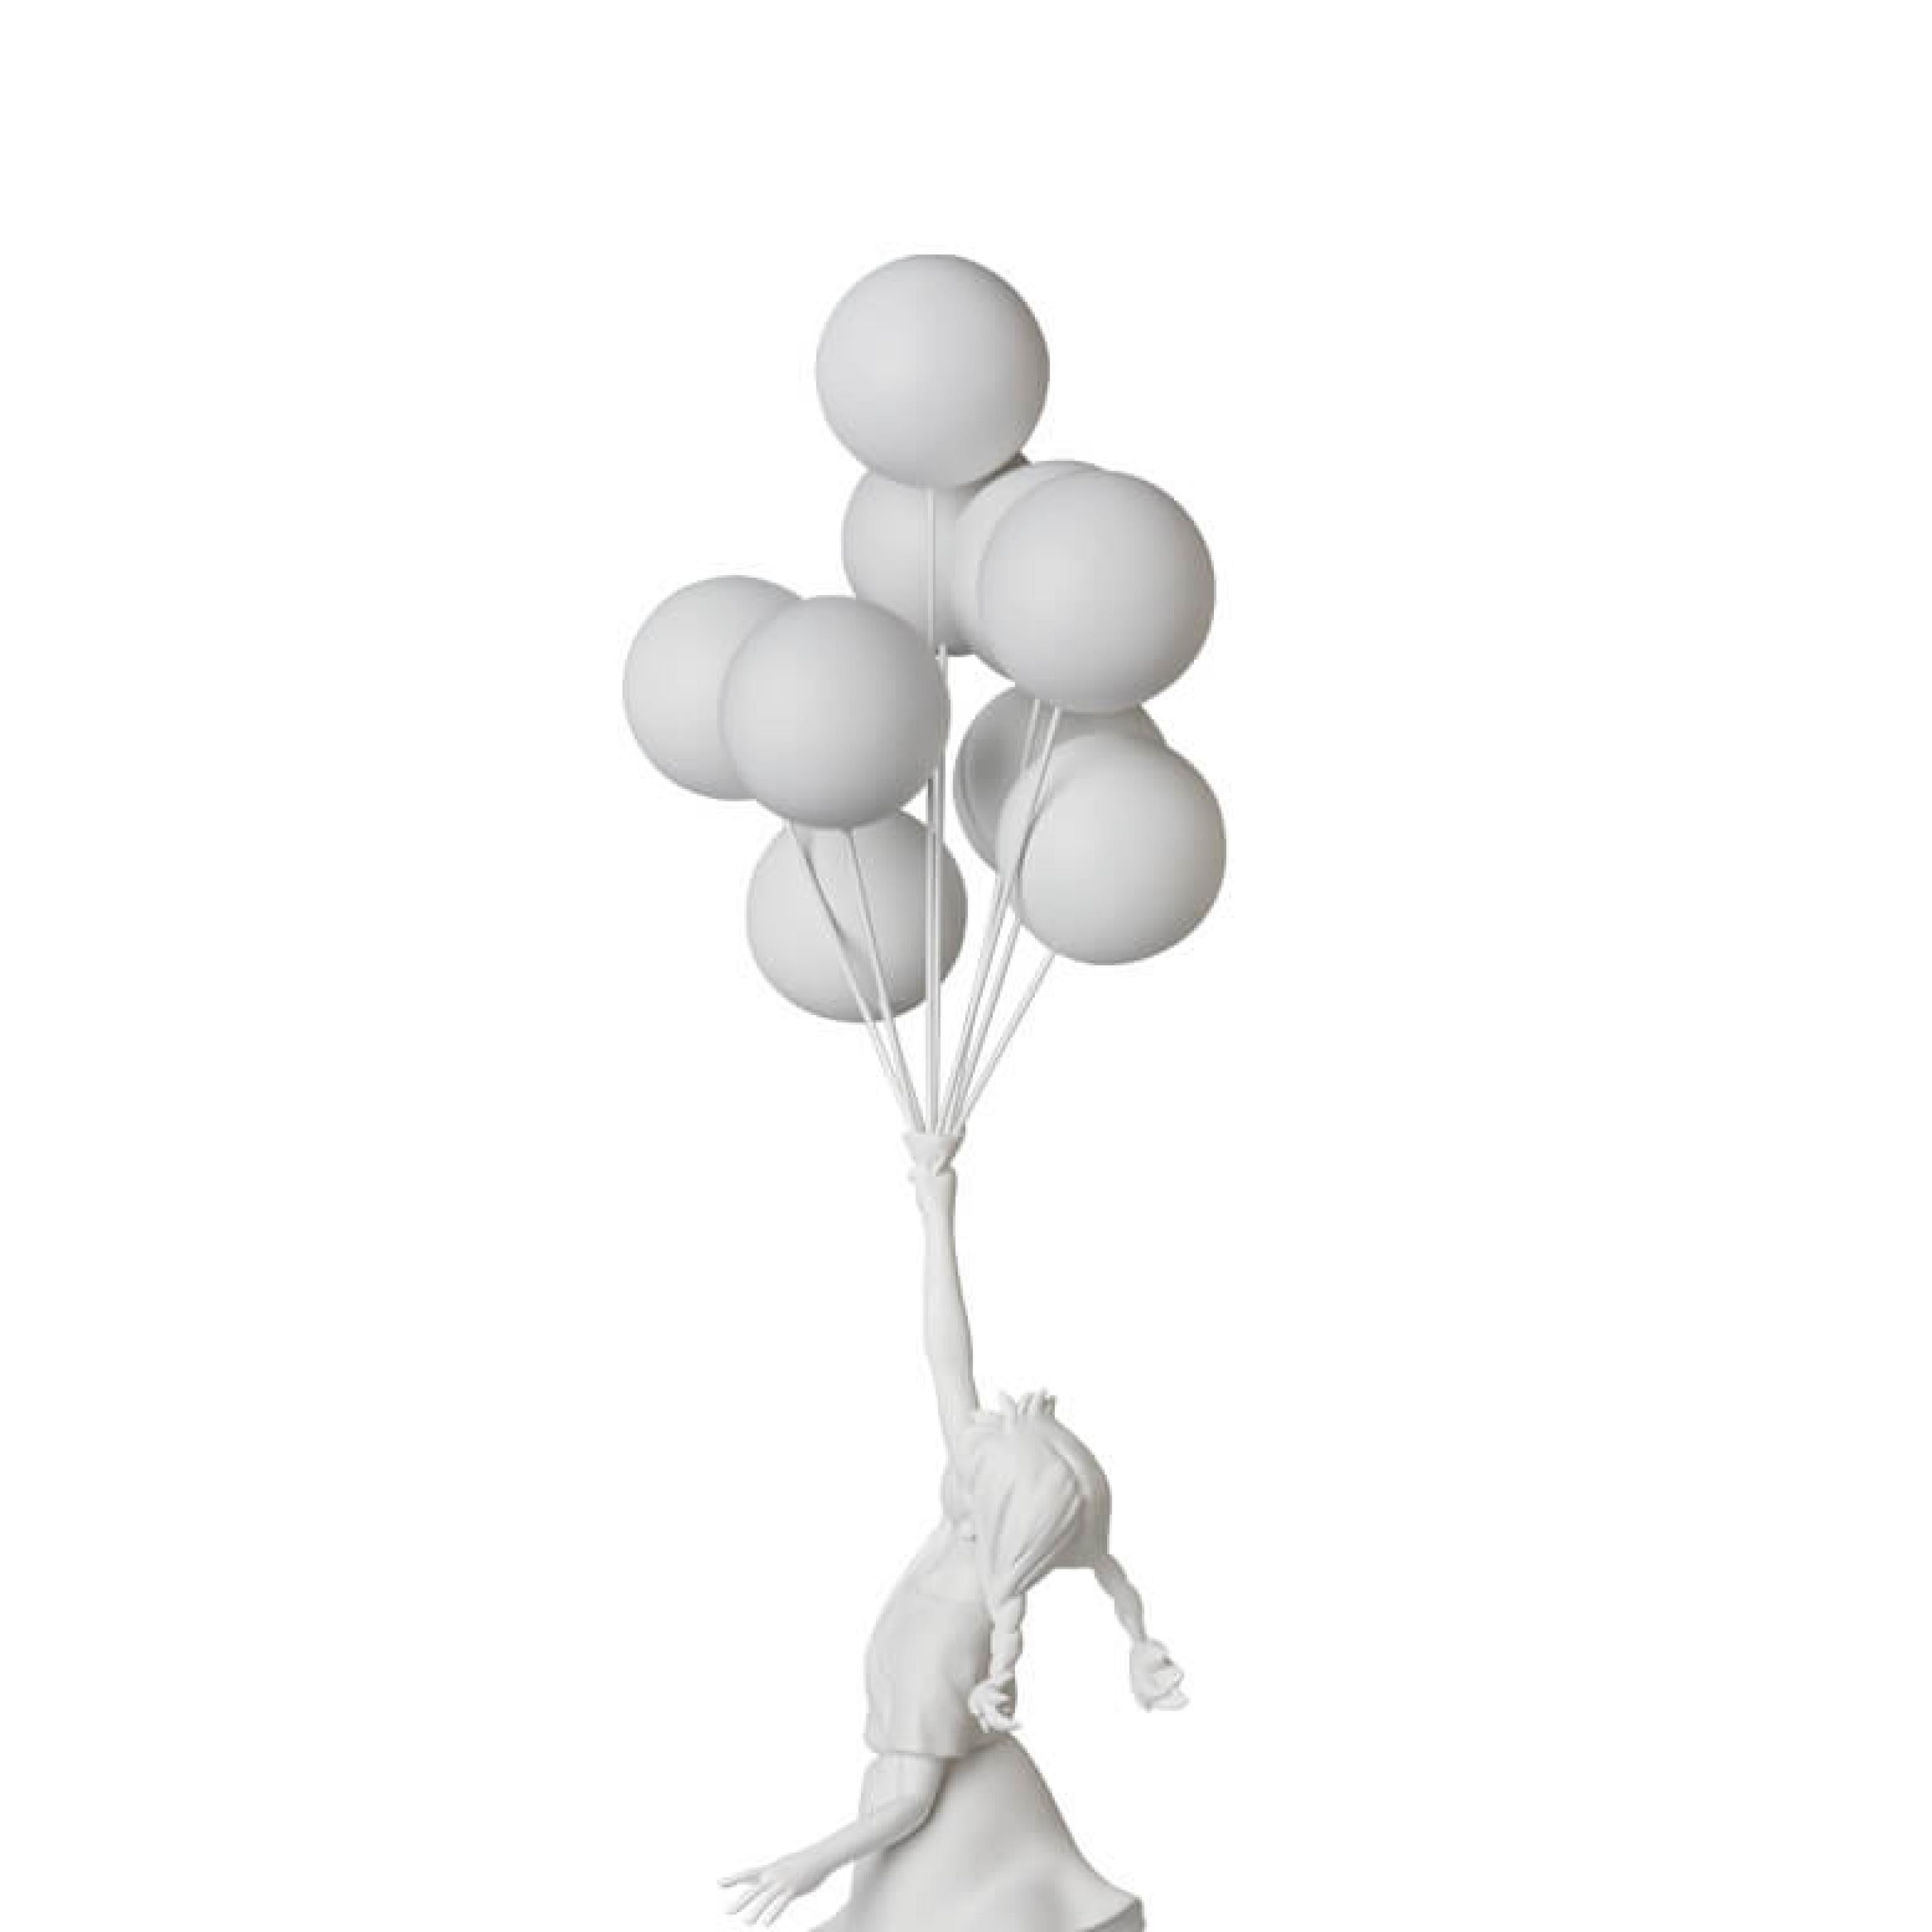 FLYING BALLOONS GIRL ORIGINAL - Sculpture by Banksy